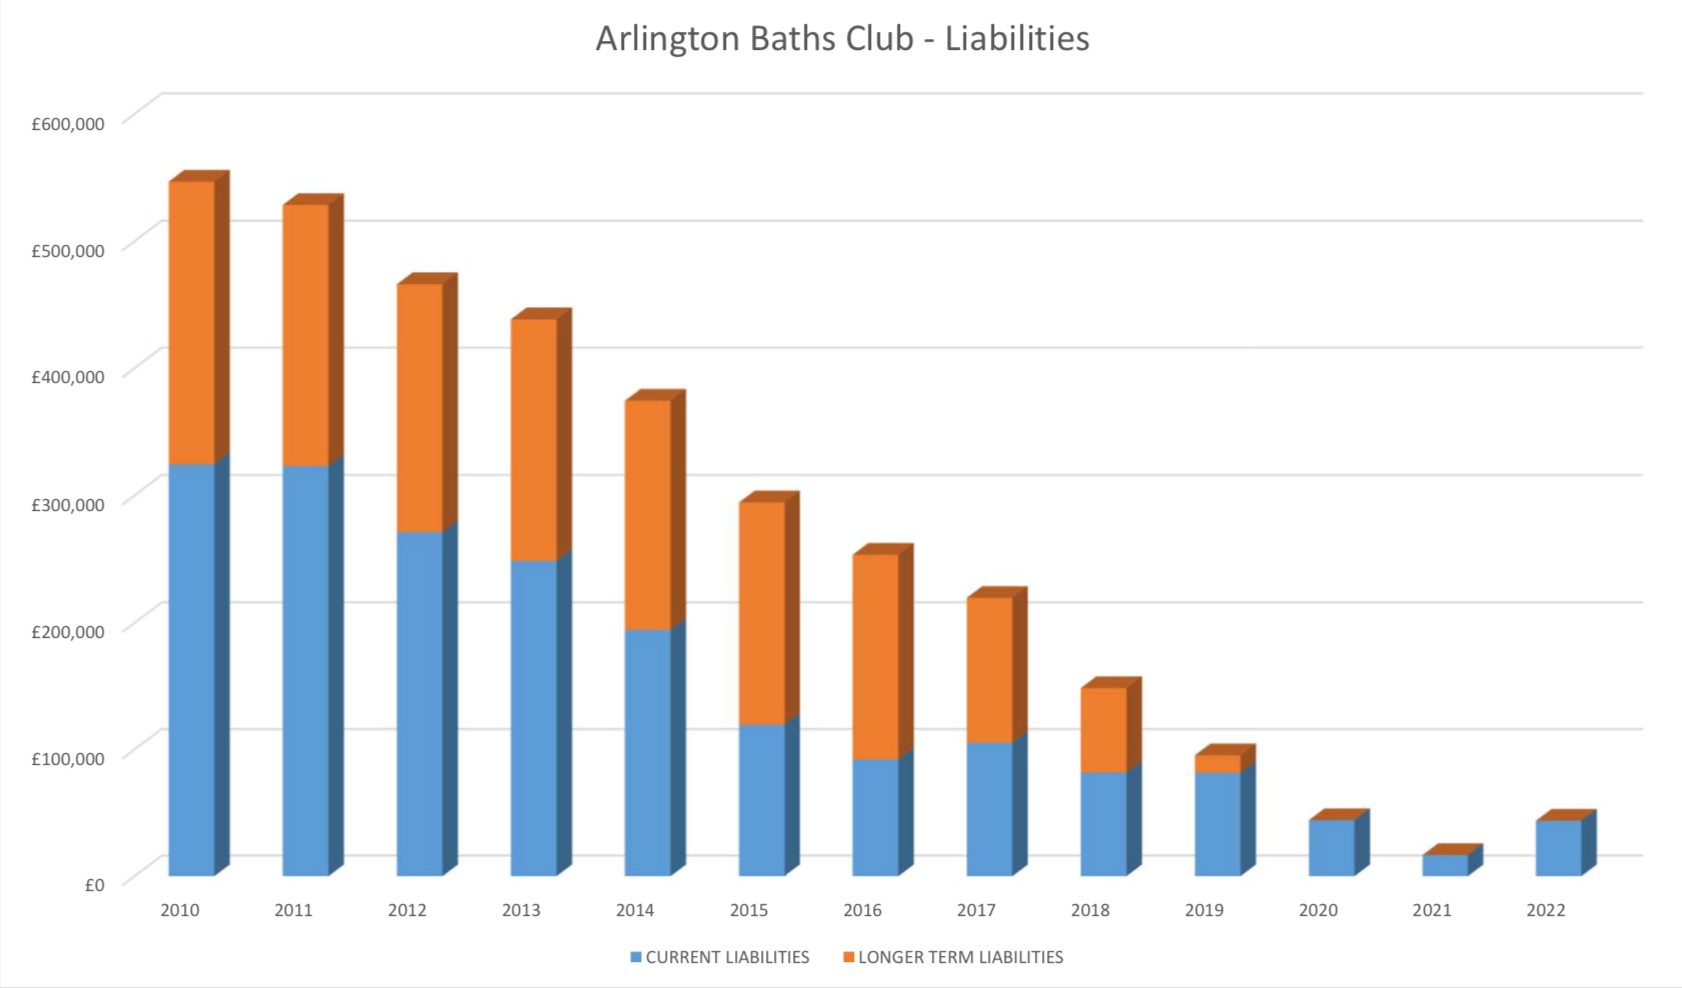 graph showing liabilities of the arlington baths club since 2000